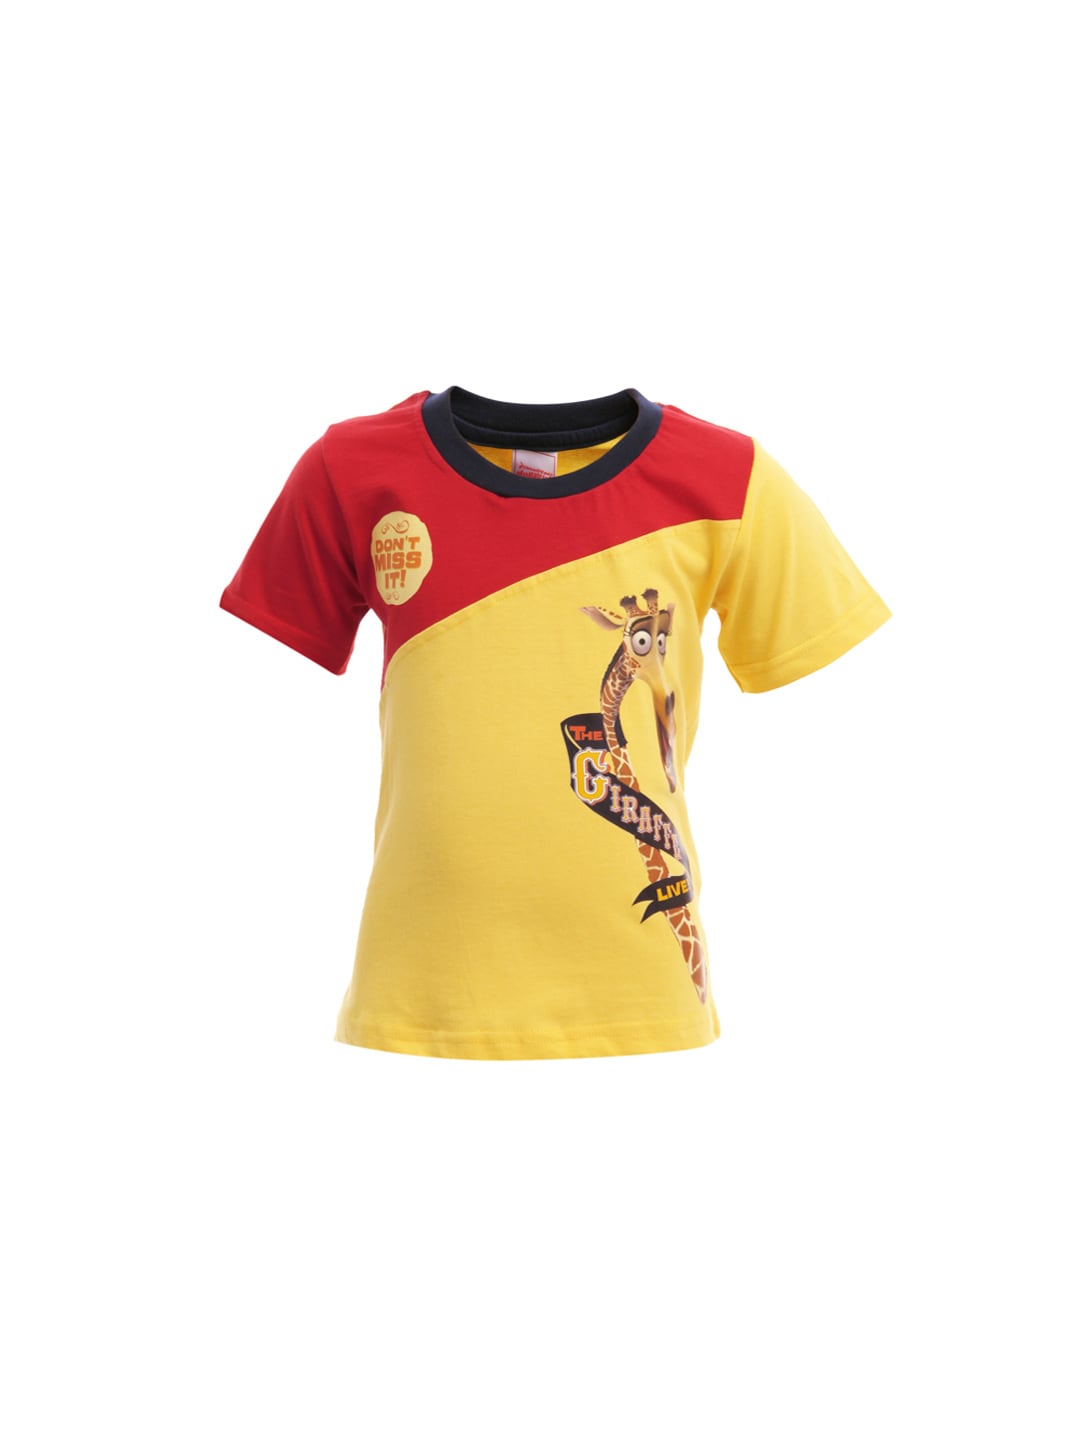 Madagascar3 Boys Yellow Printed T-Shirt